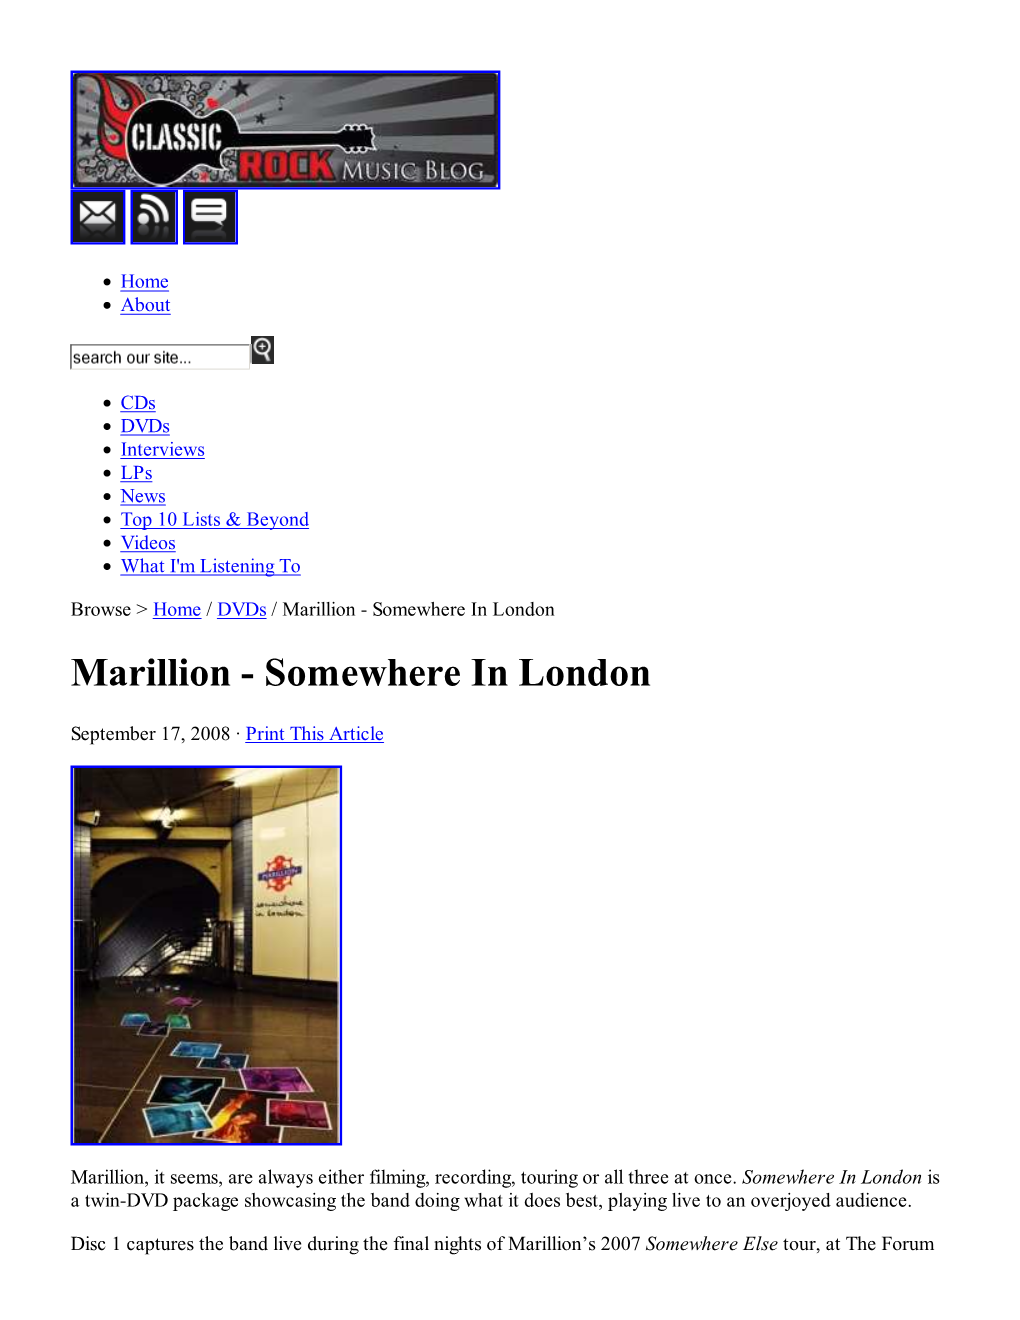 Marillion - Somewhere in London Marillion - Somewhere in London